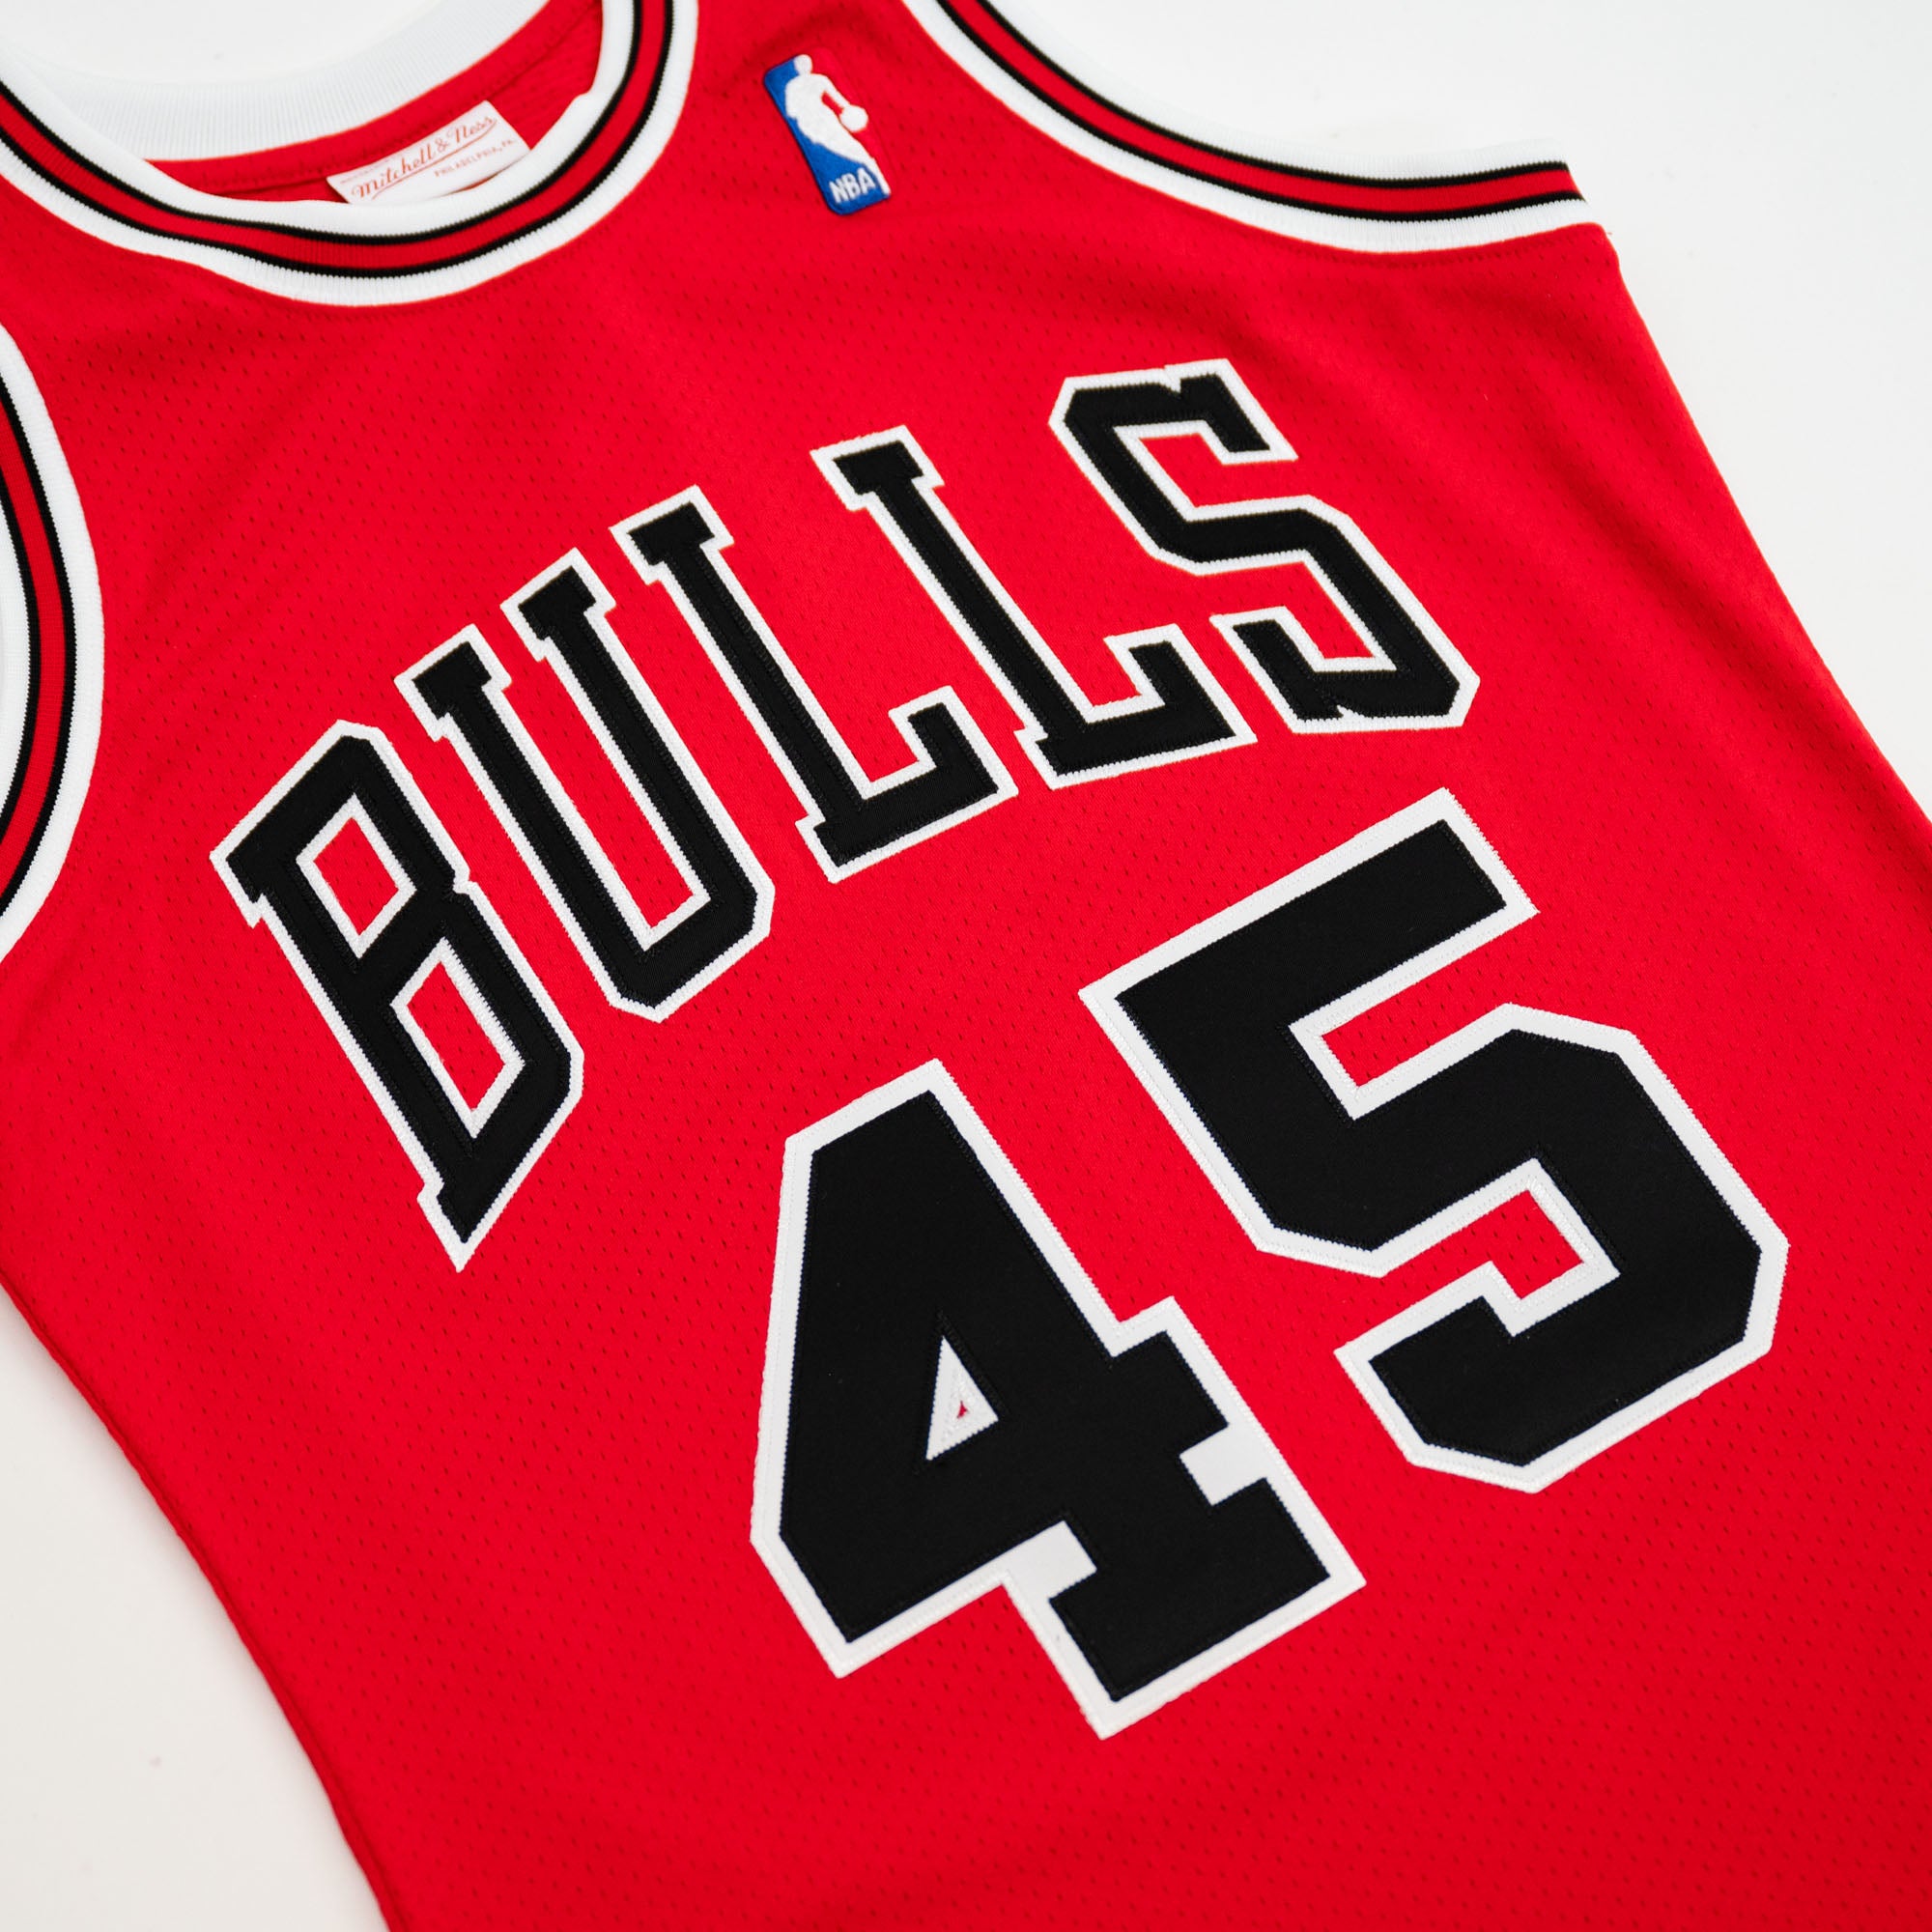 Chicago Bulls Michael Jordan 1994-95 Road 45 Authentic Jersey By